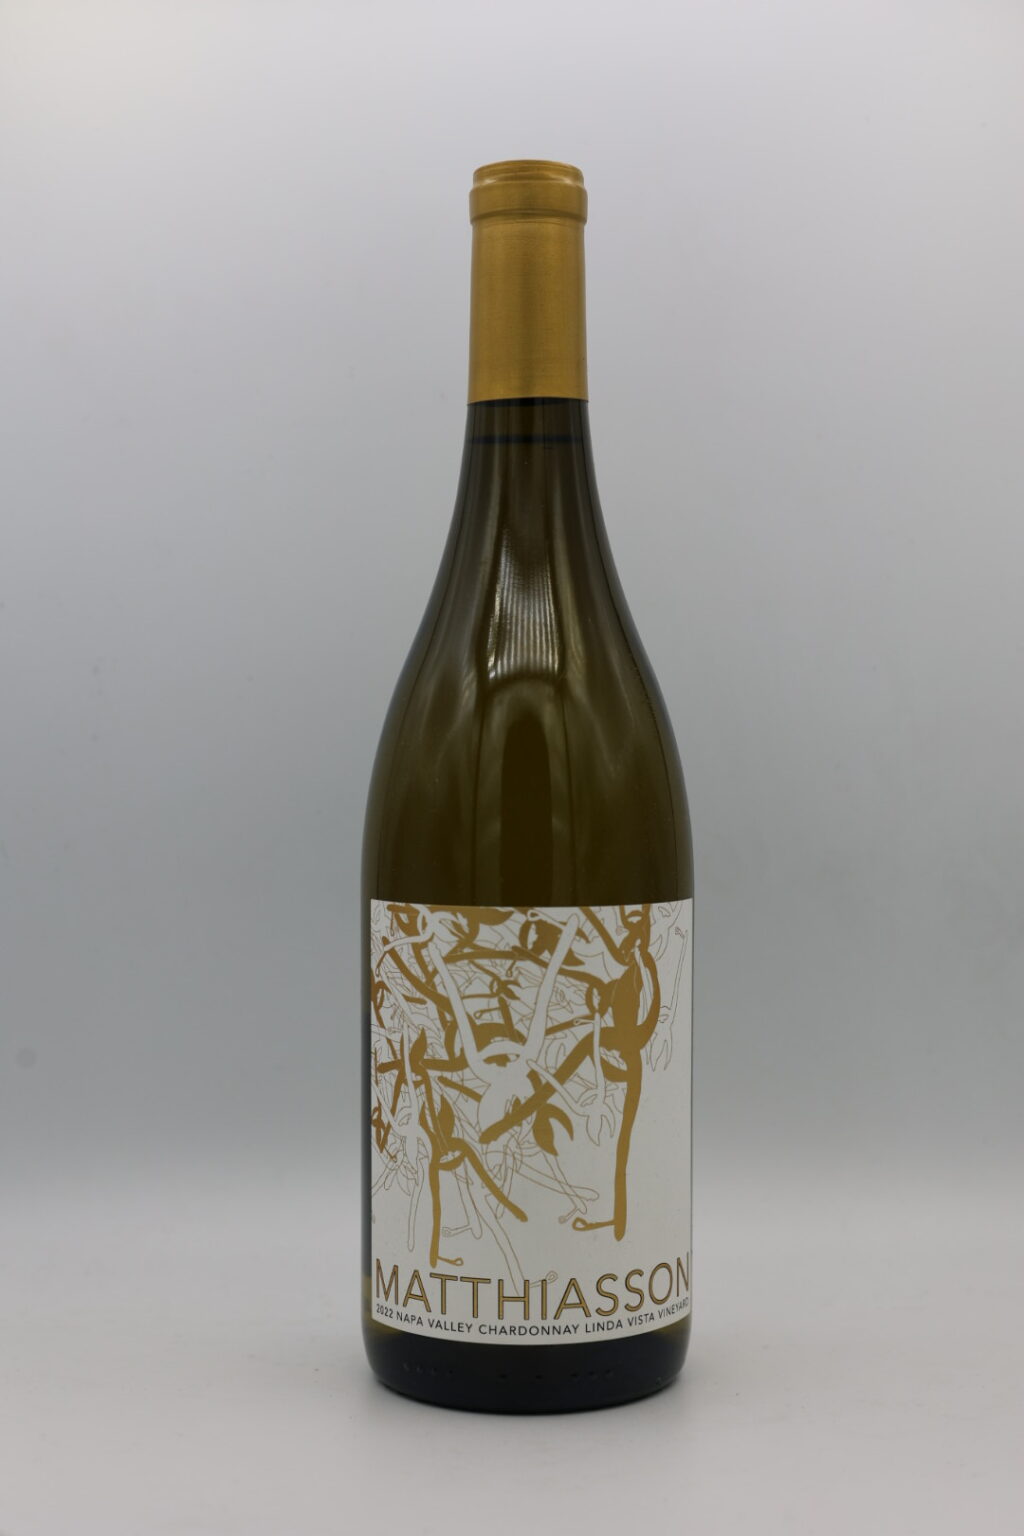 Matthiasson Linda Vista Vineyard Chardonnay